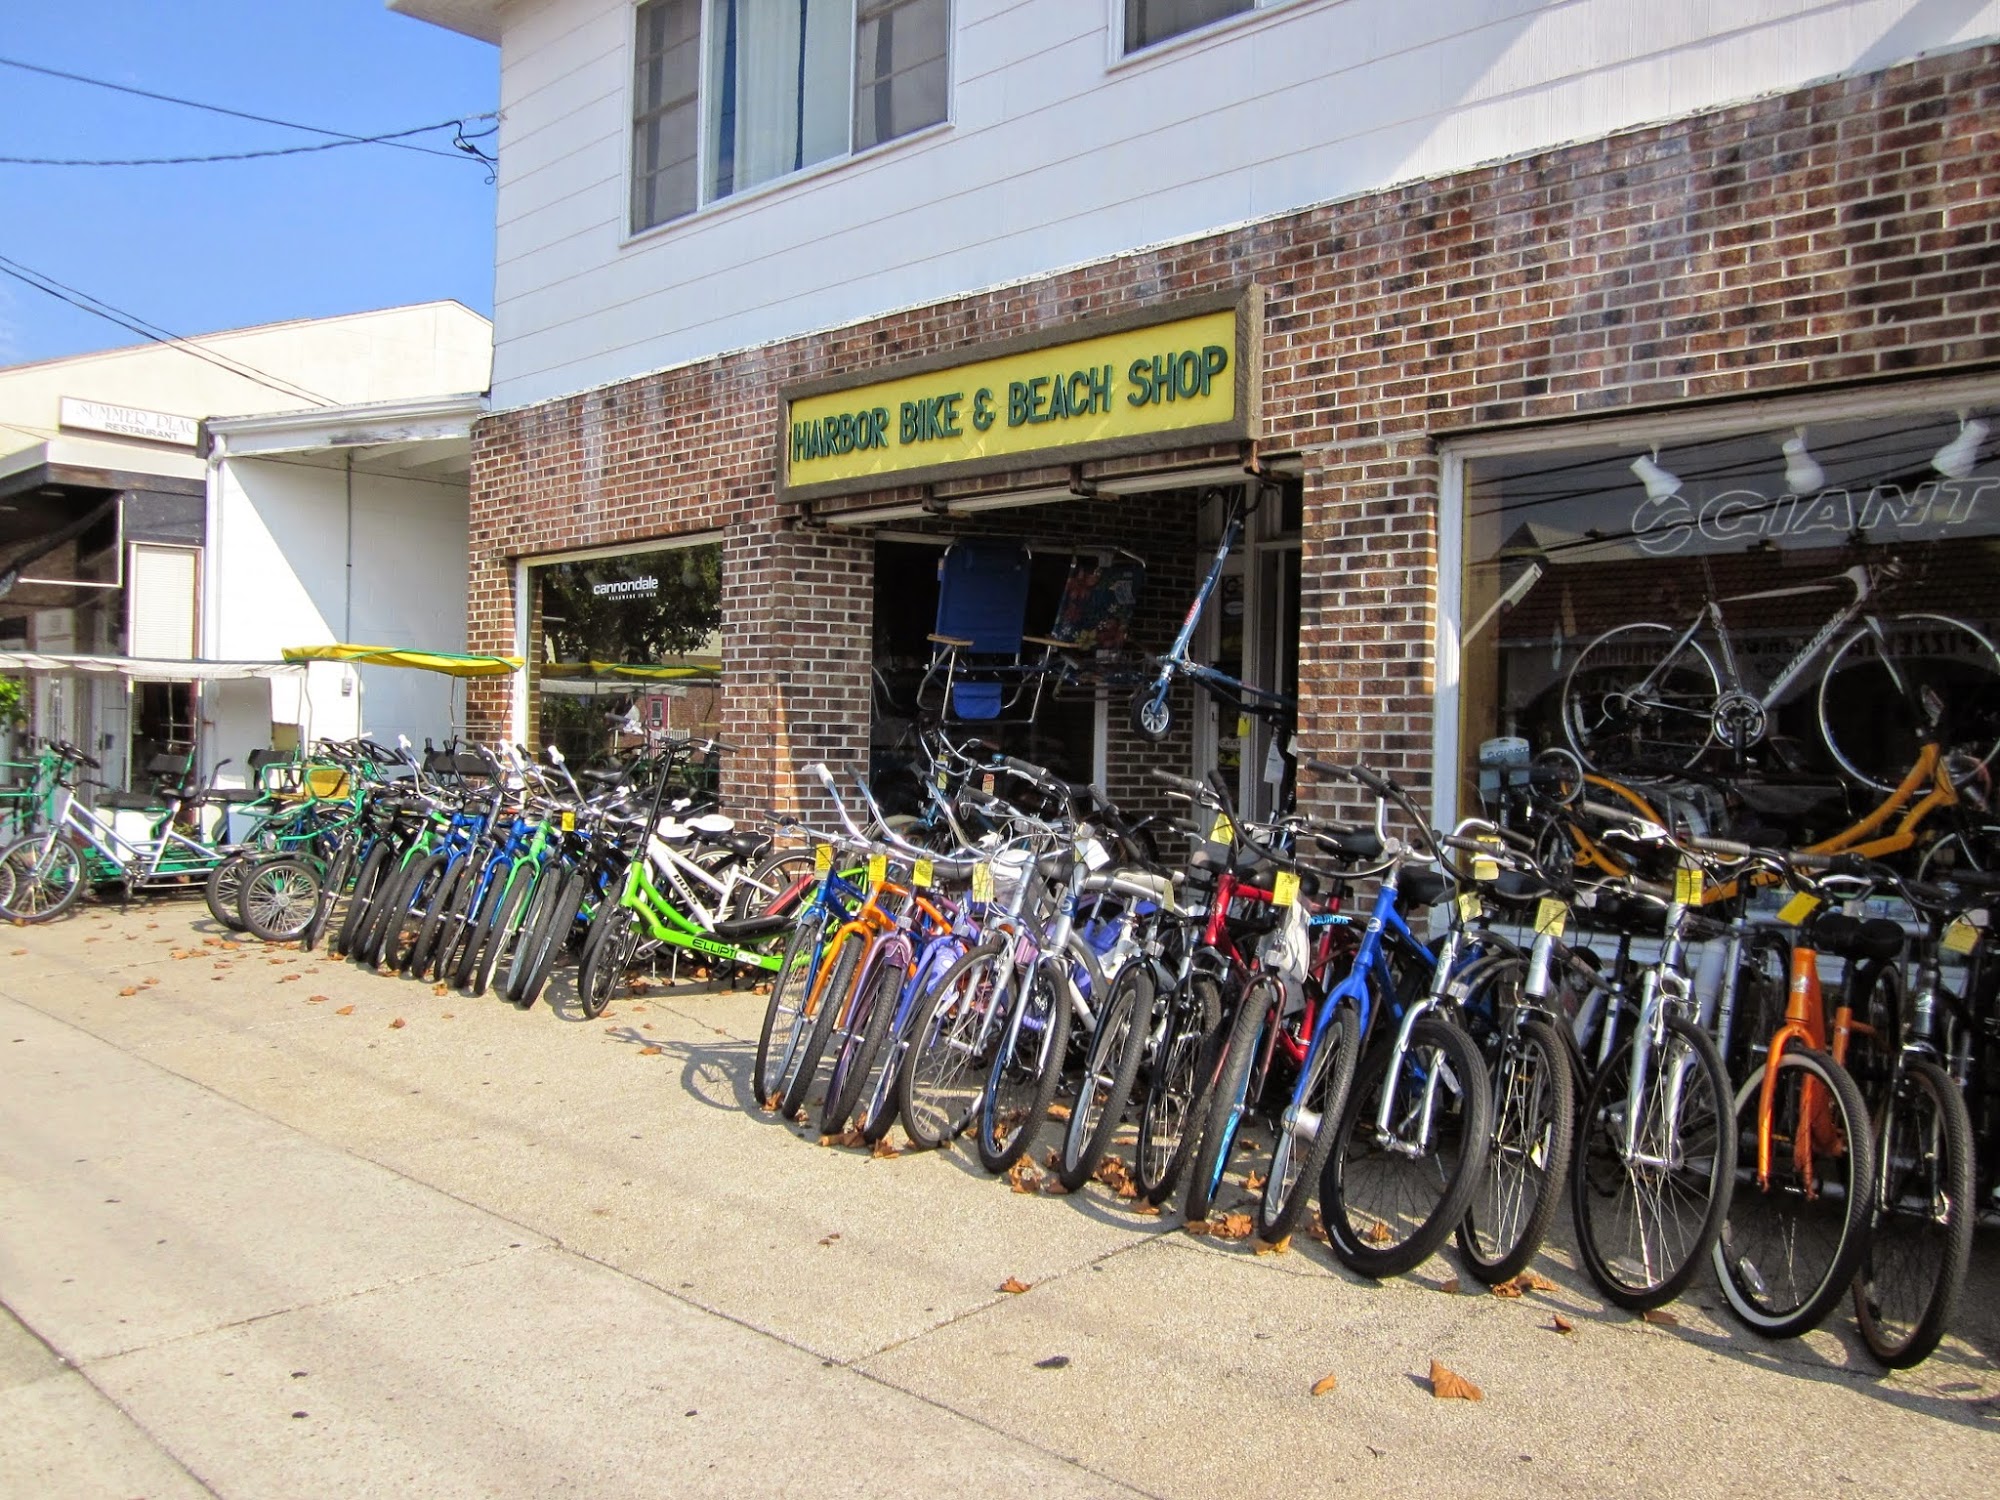 Harbor Bike & Beach Shop